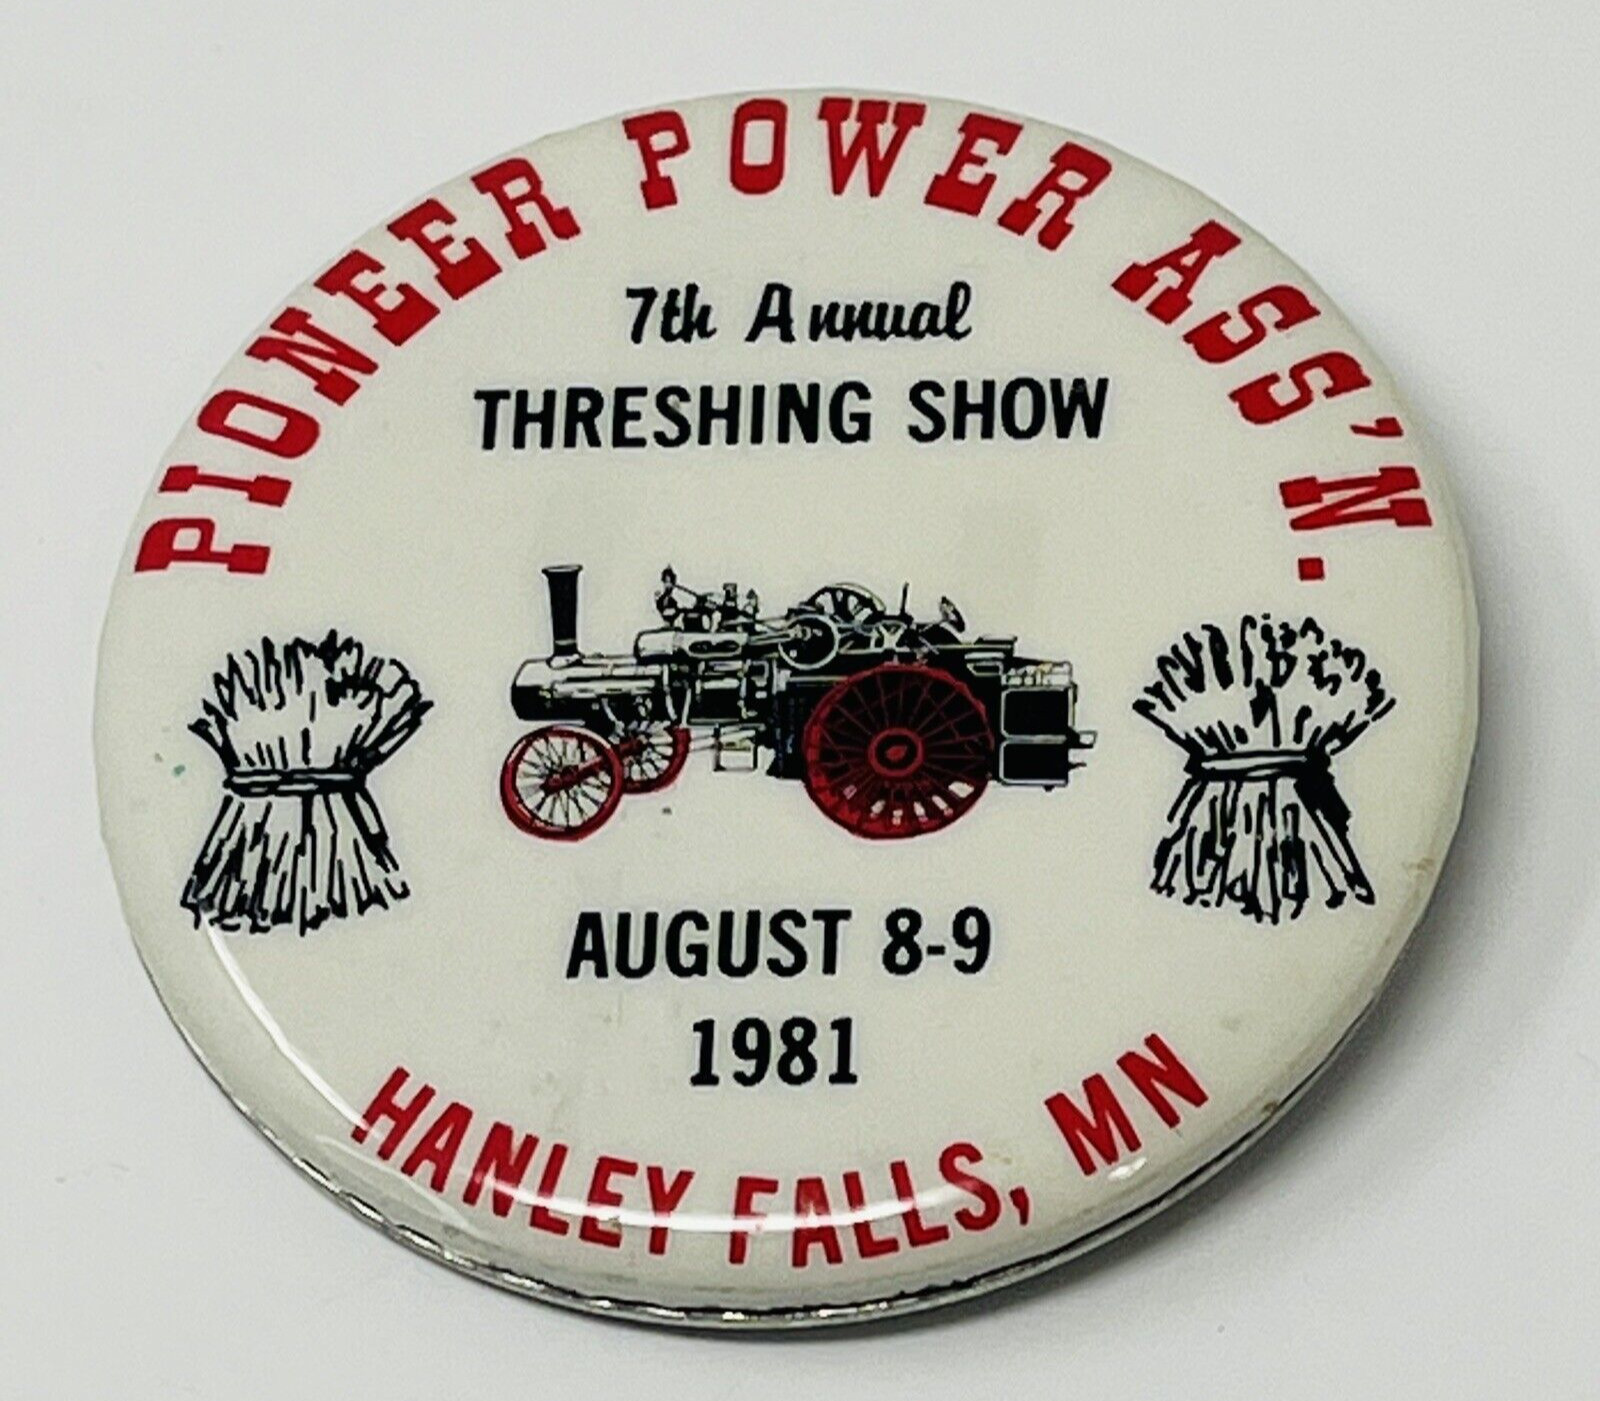 1981 Hanley Falls MN Pioneer Power Association Threshing Show Pin Pinback Button